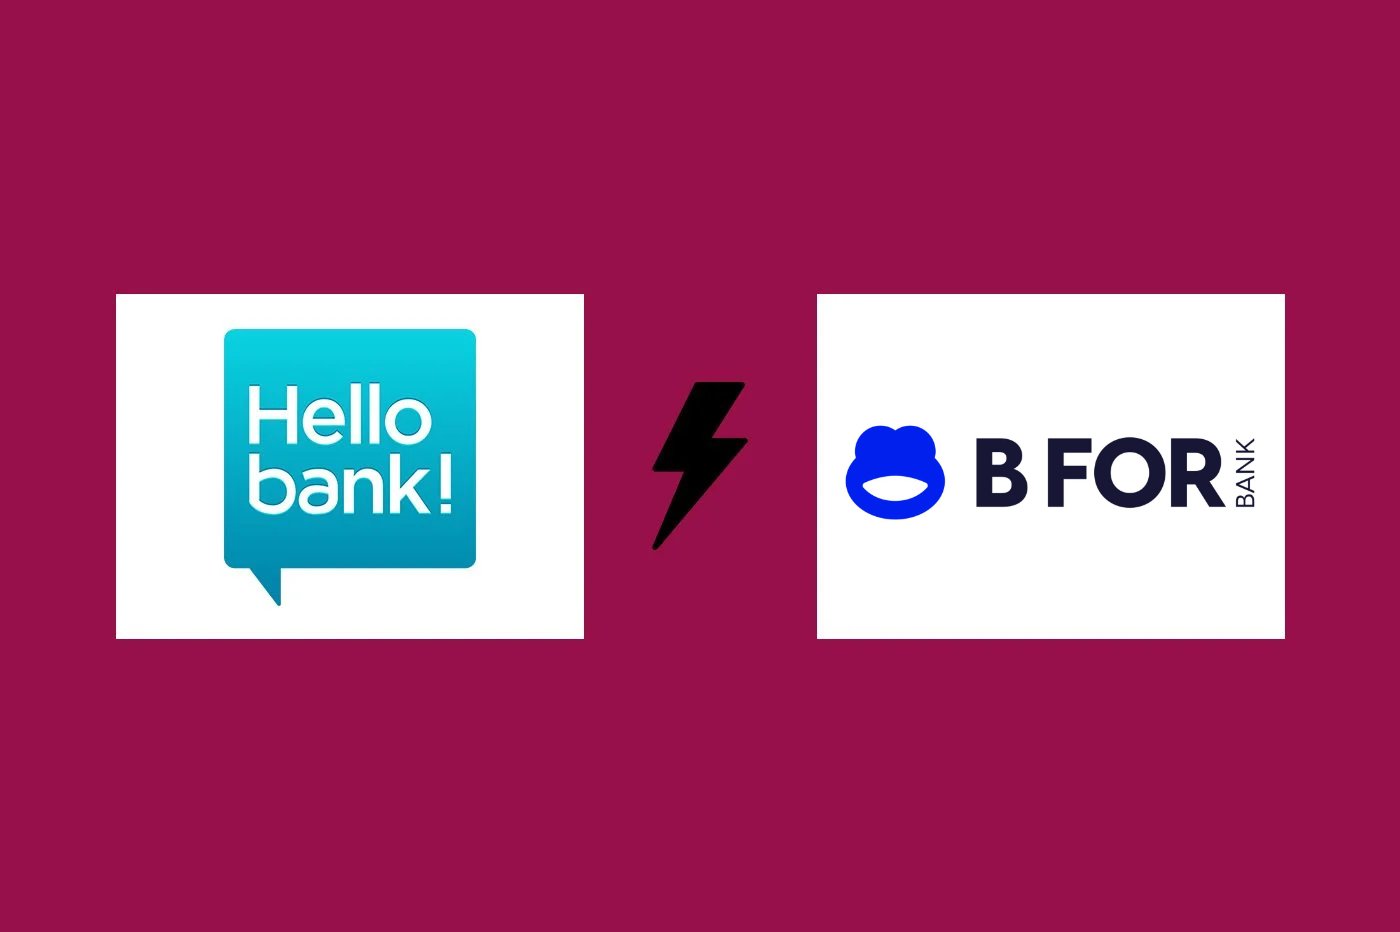 HelloBank! vs BforBank